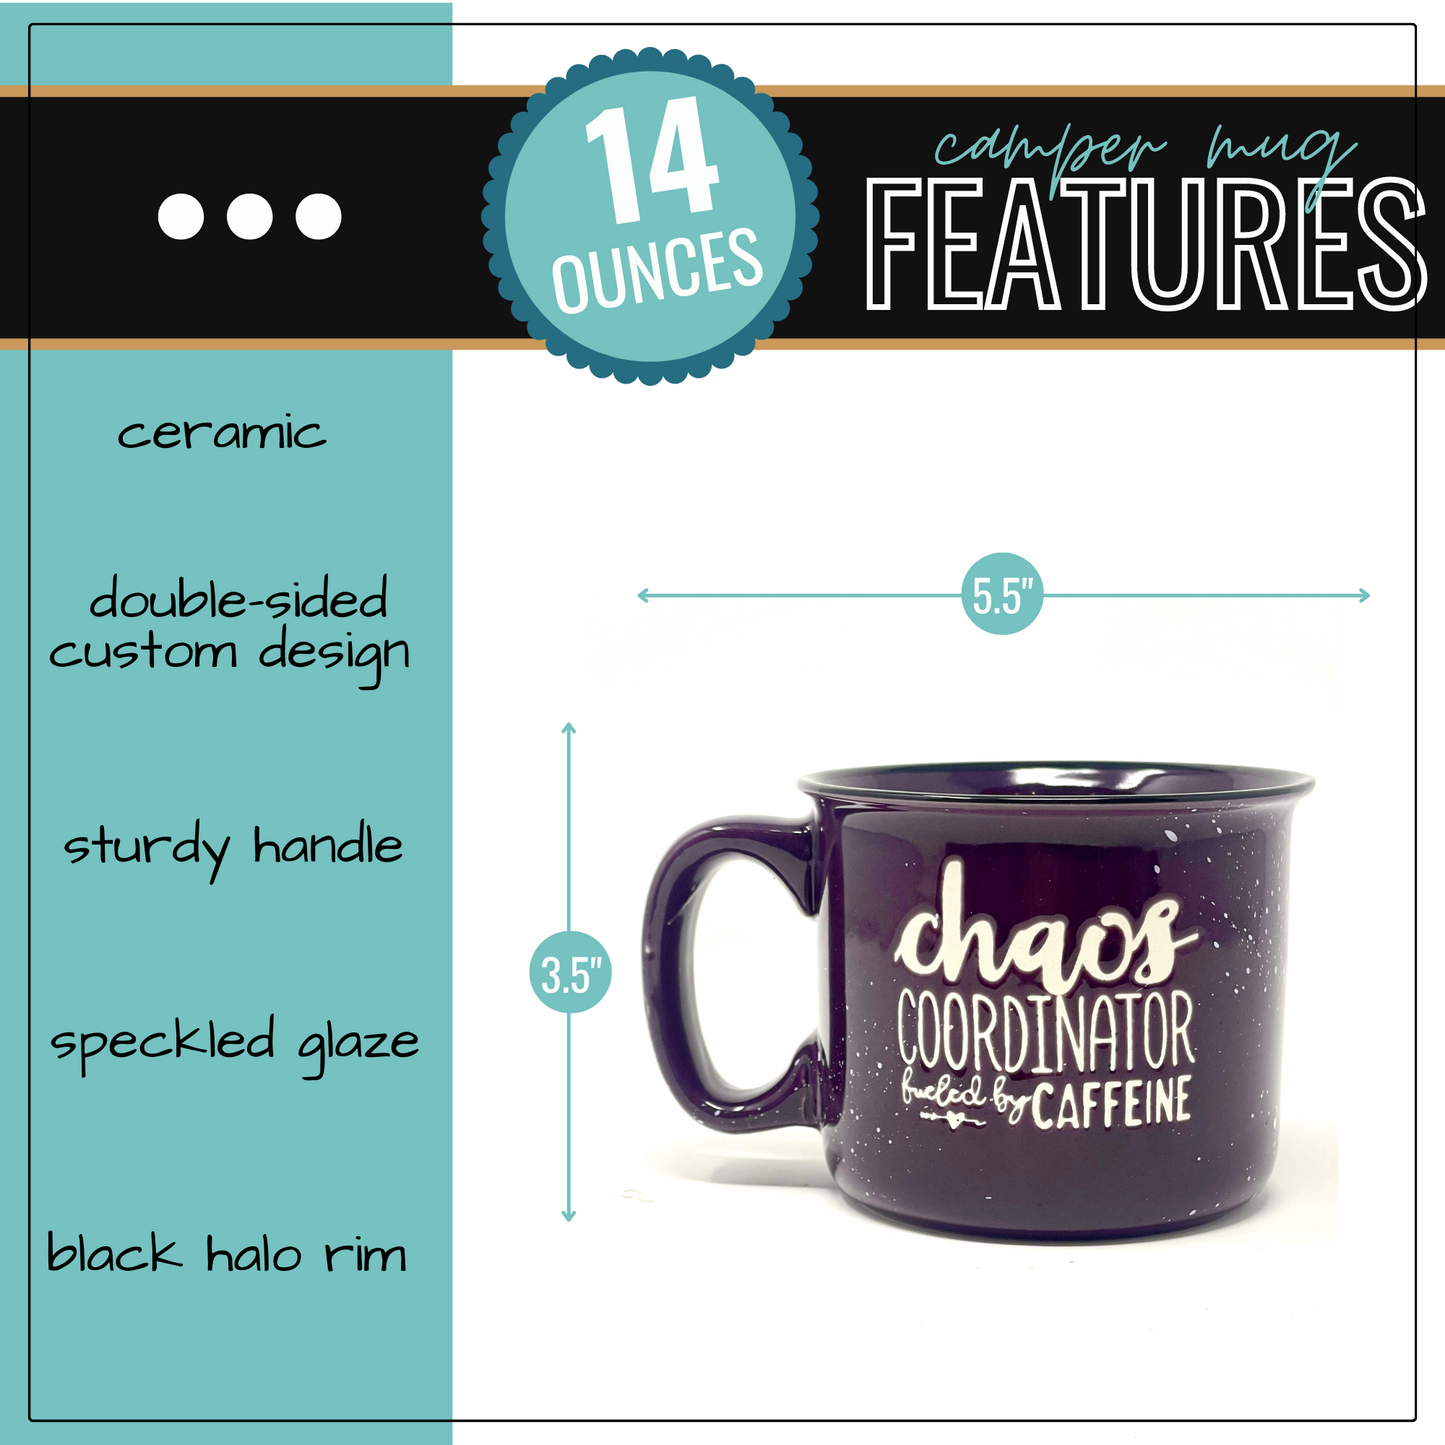 Chaos Coordinator 15 oz  Plum Ceramic Mug for Bosses - Outlet Deal